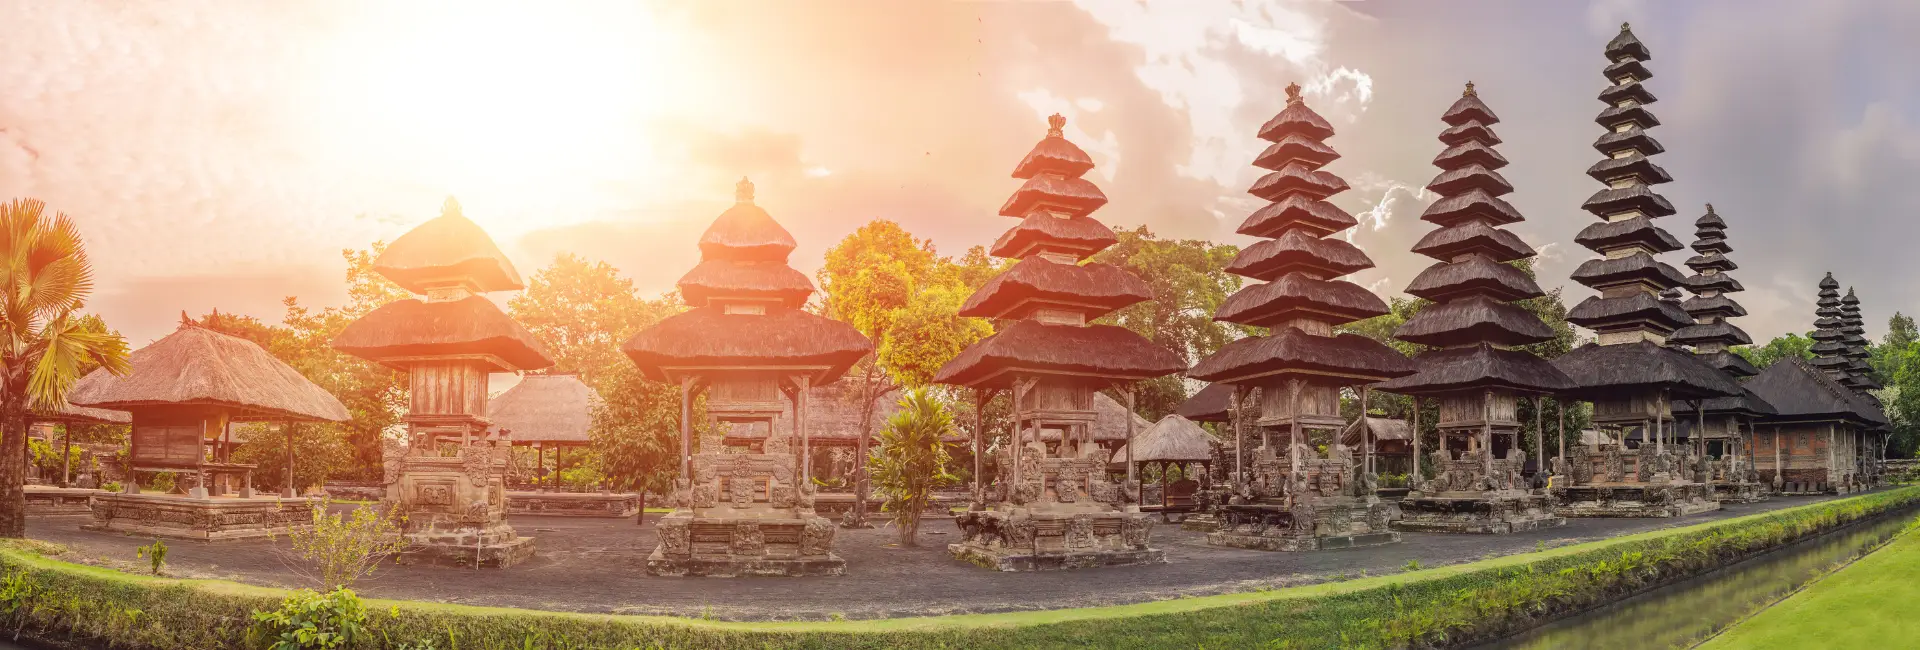 Indonezia - Bali